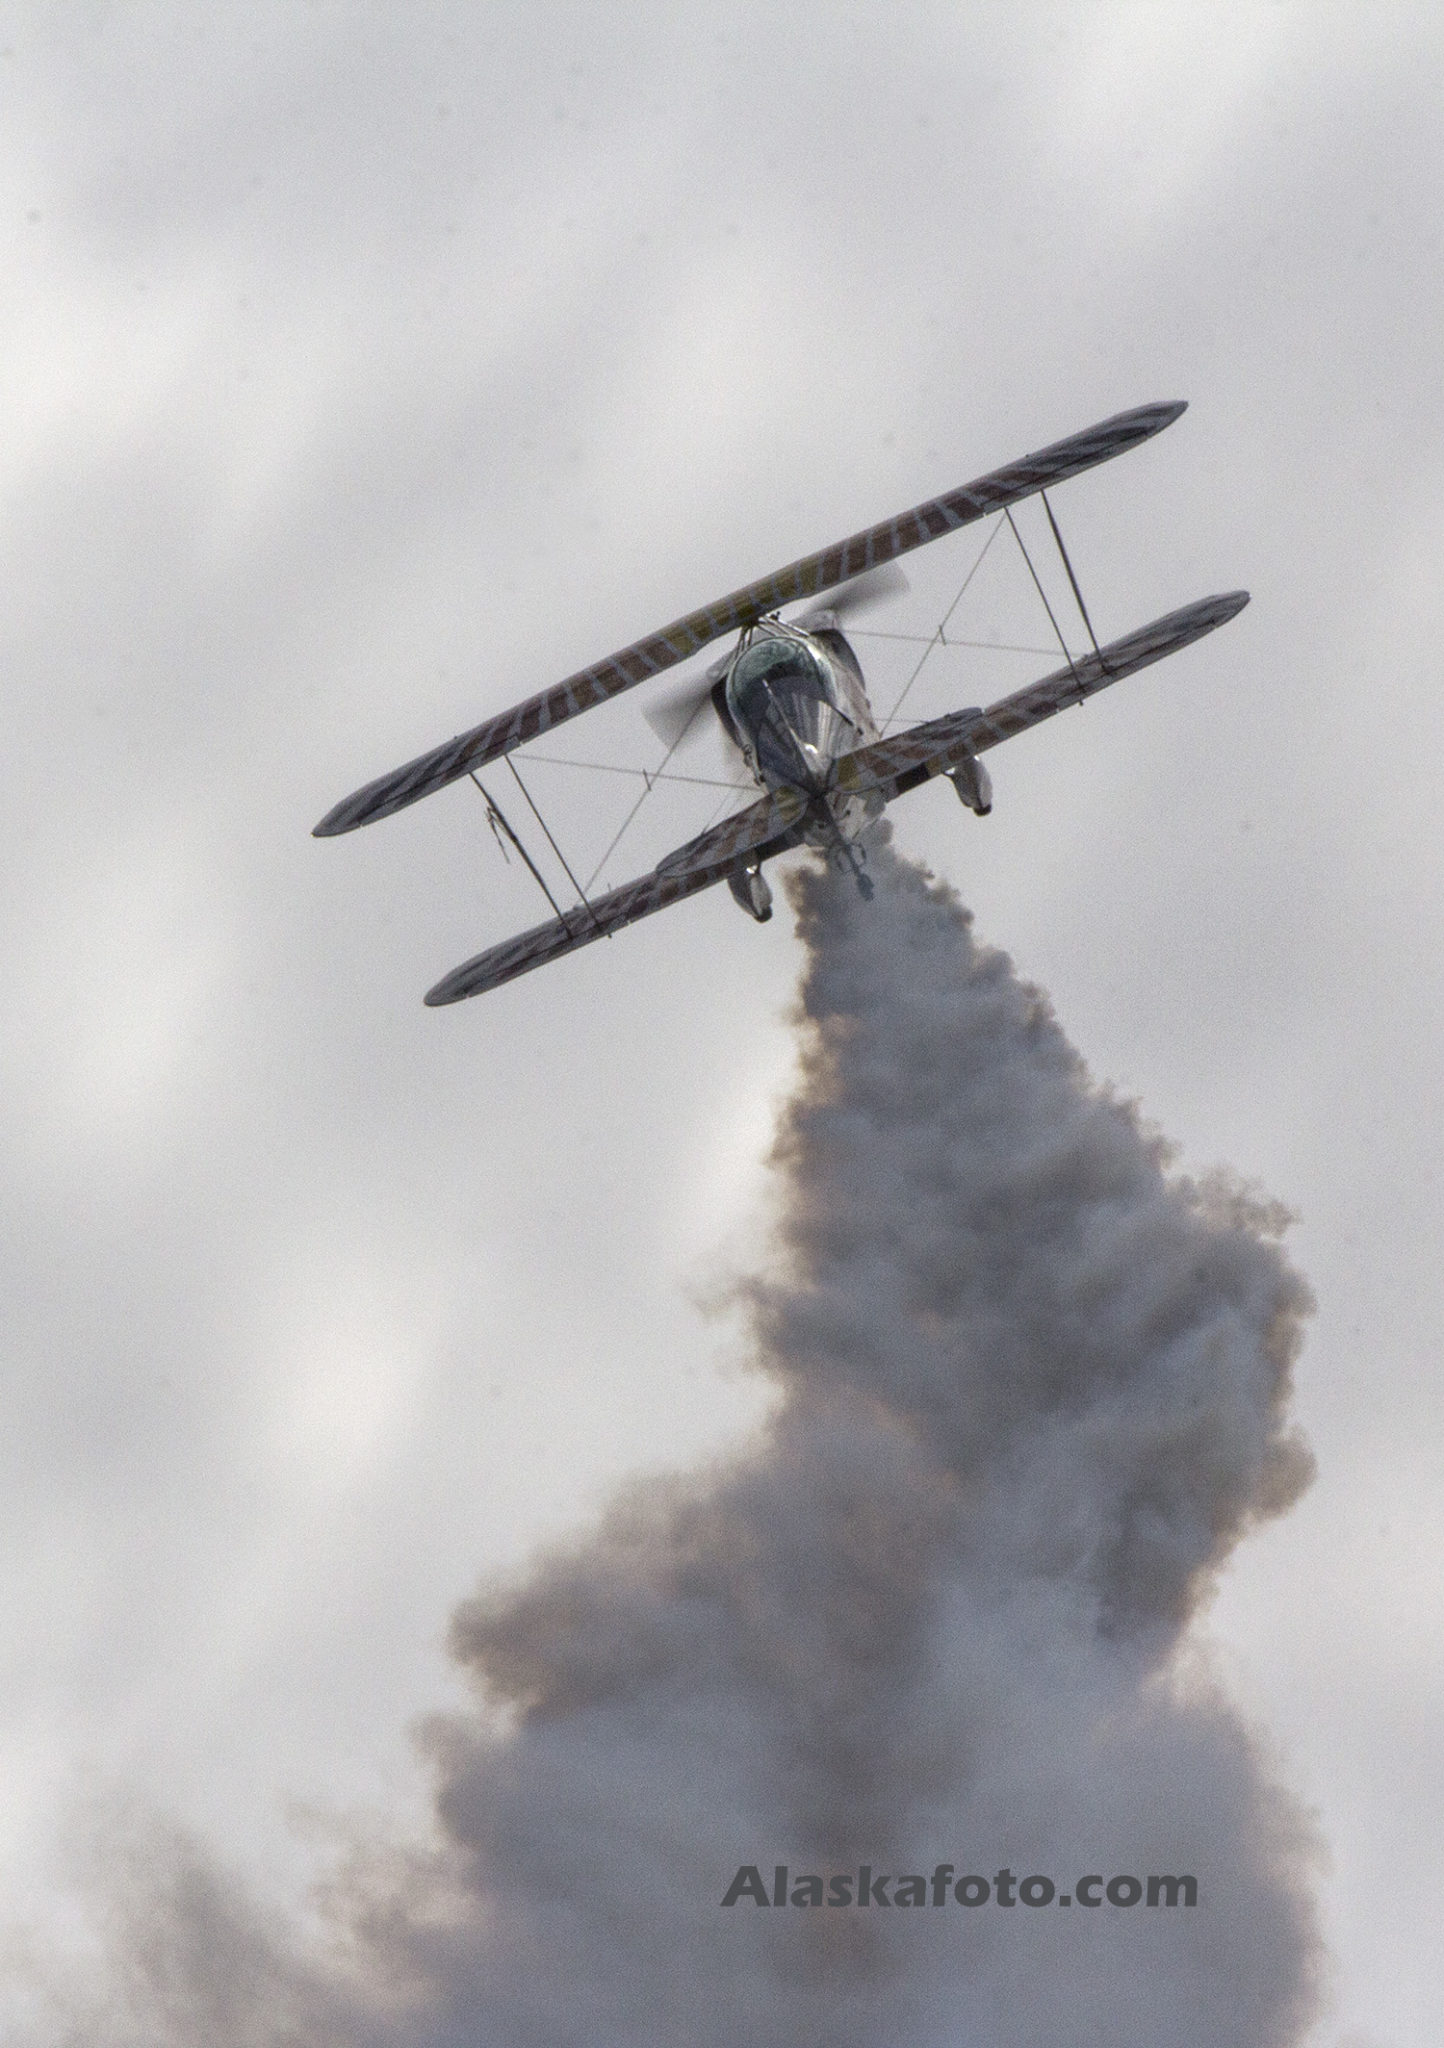 Alaska Aviation photography | Alaskafoto- Best Aircraft photography & aircraft portraits